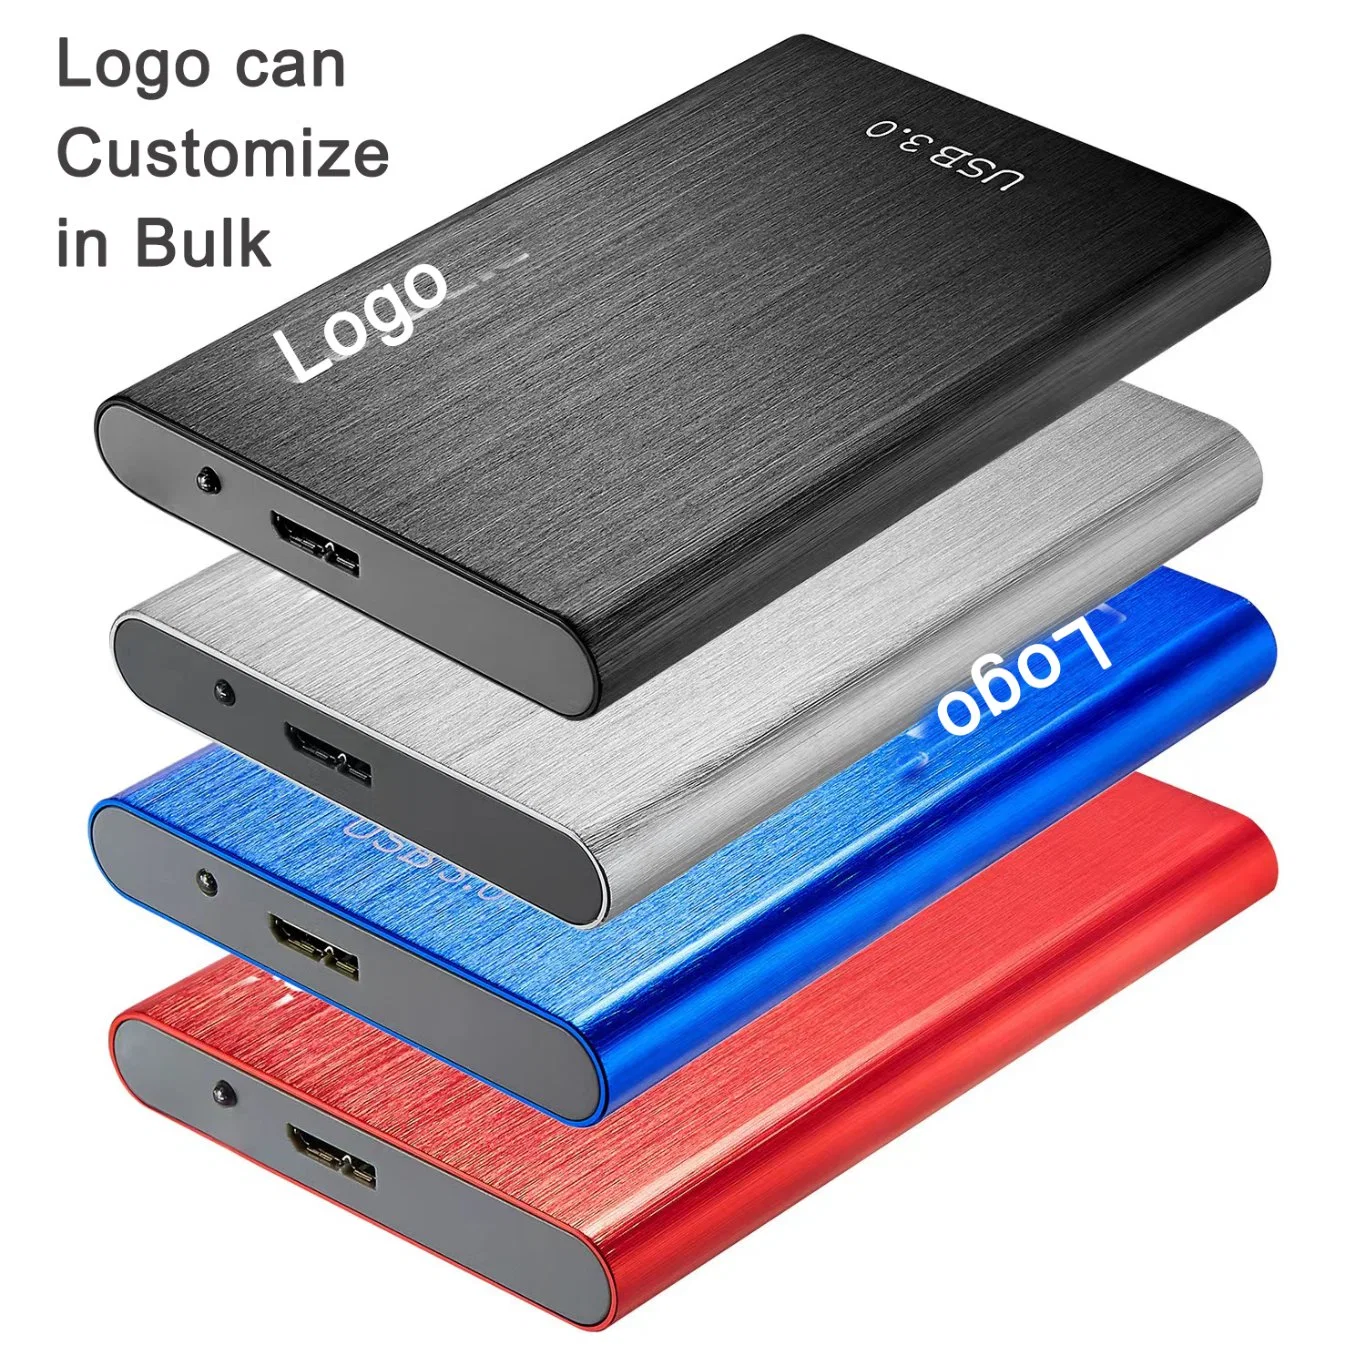 Portable 2.5" HDD Hard Drive 500GB 1tb 2tb (Logo can Customize in Bulk) USB 3.0 External Hard Drive 2.5 Inch Hard Disk Compatible with USB 2.0